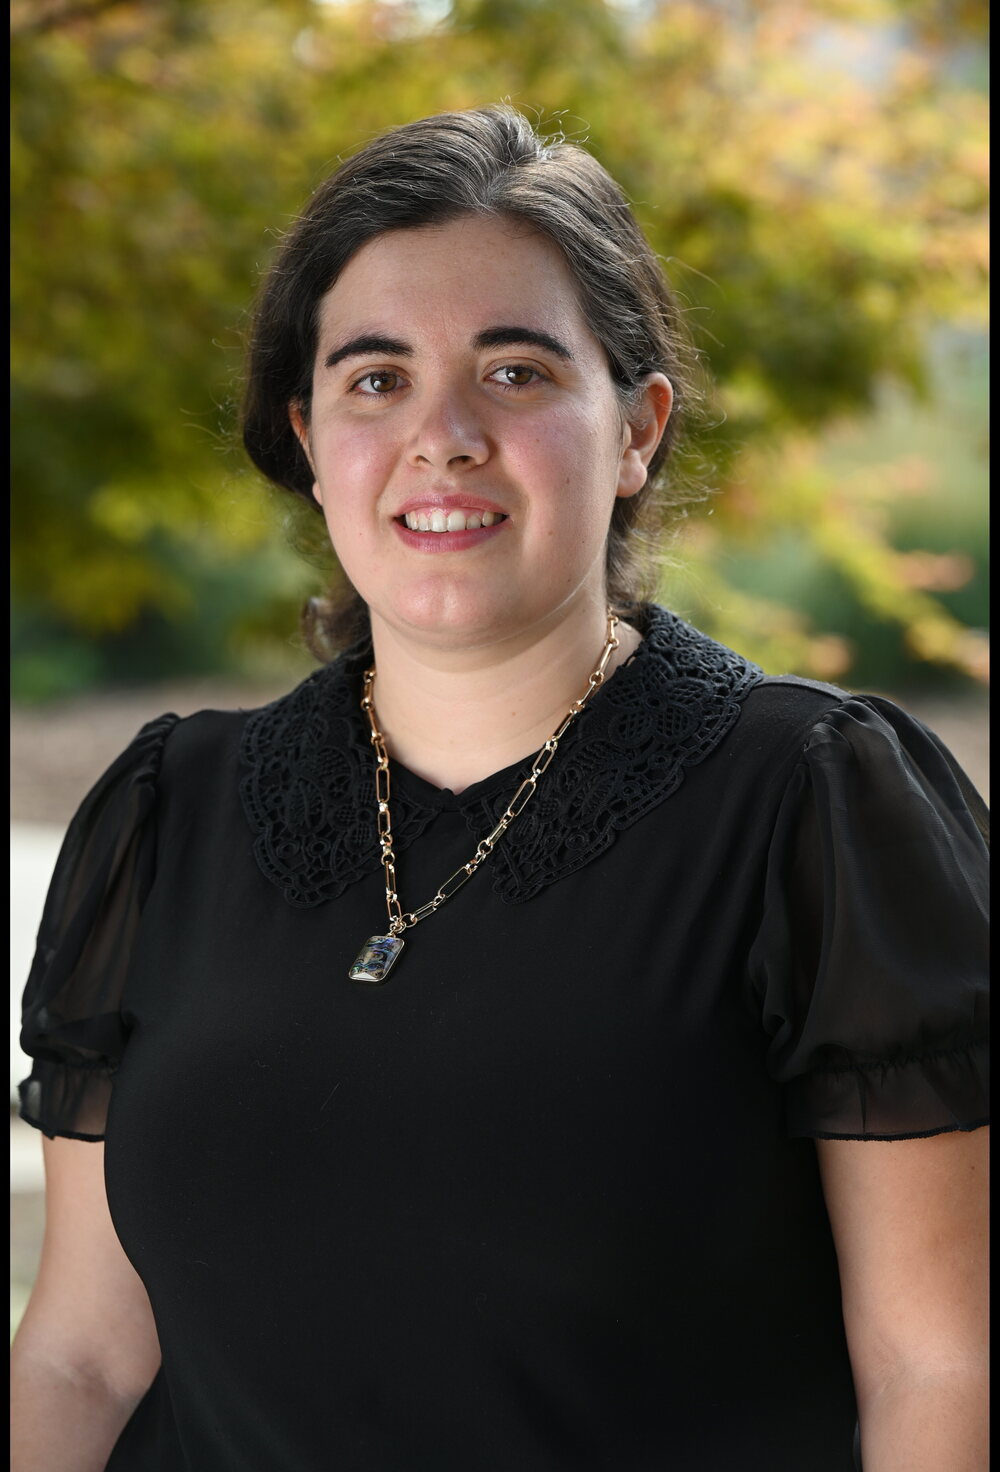 Headshot image of graduate student Sophia Romero